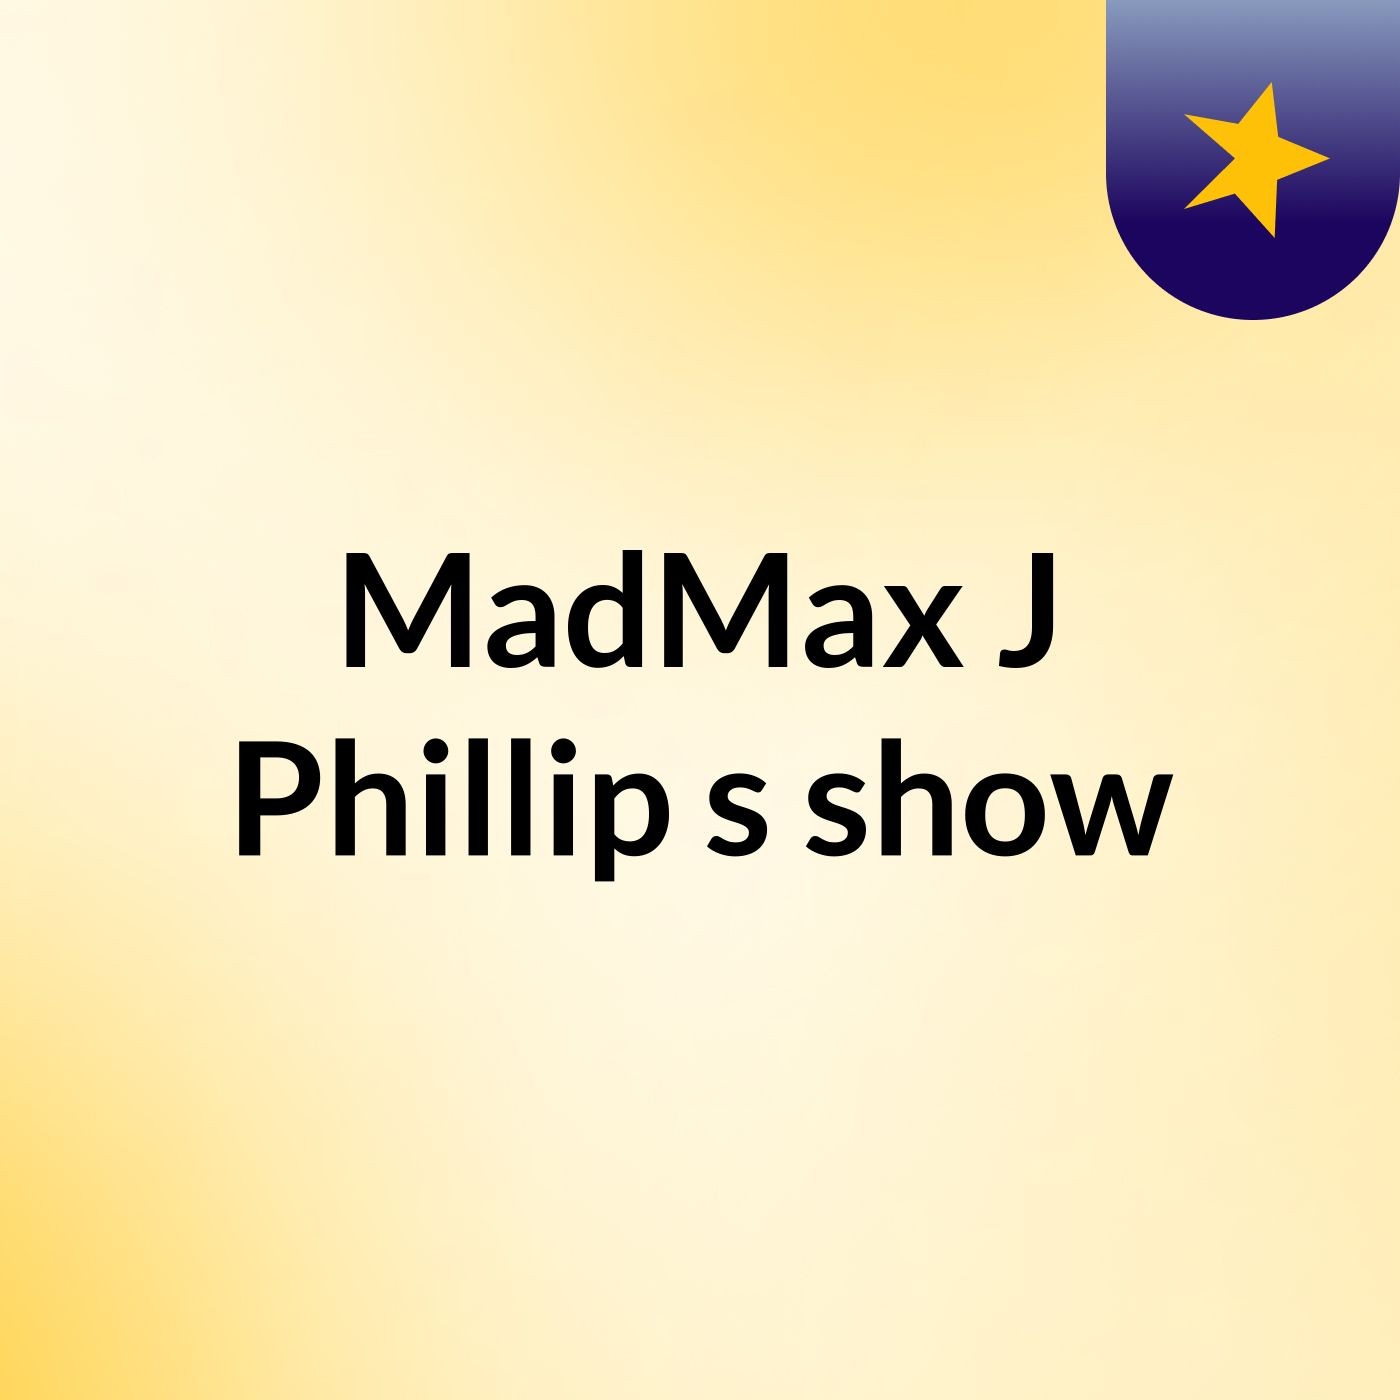 Episode 3 - MadMax J Phillip's show